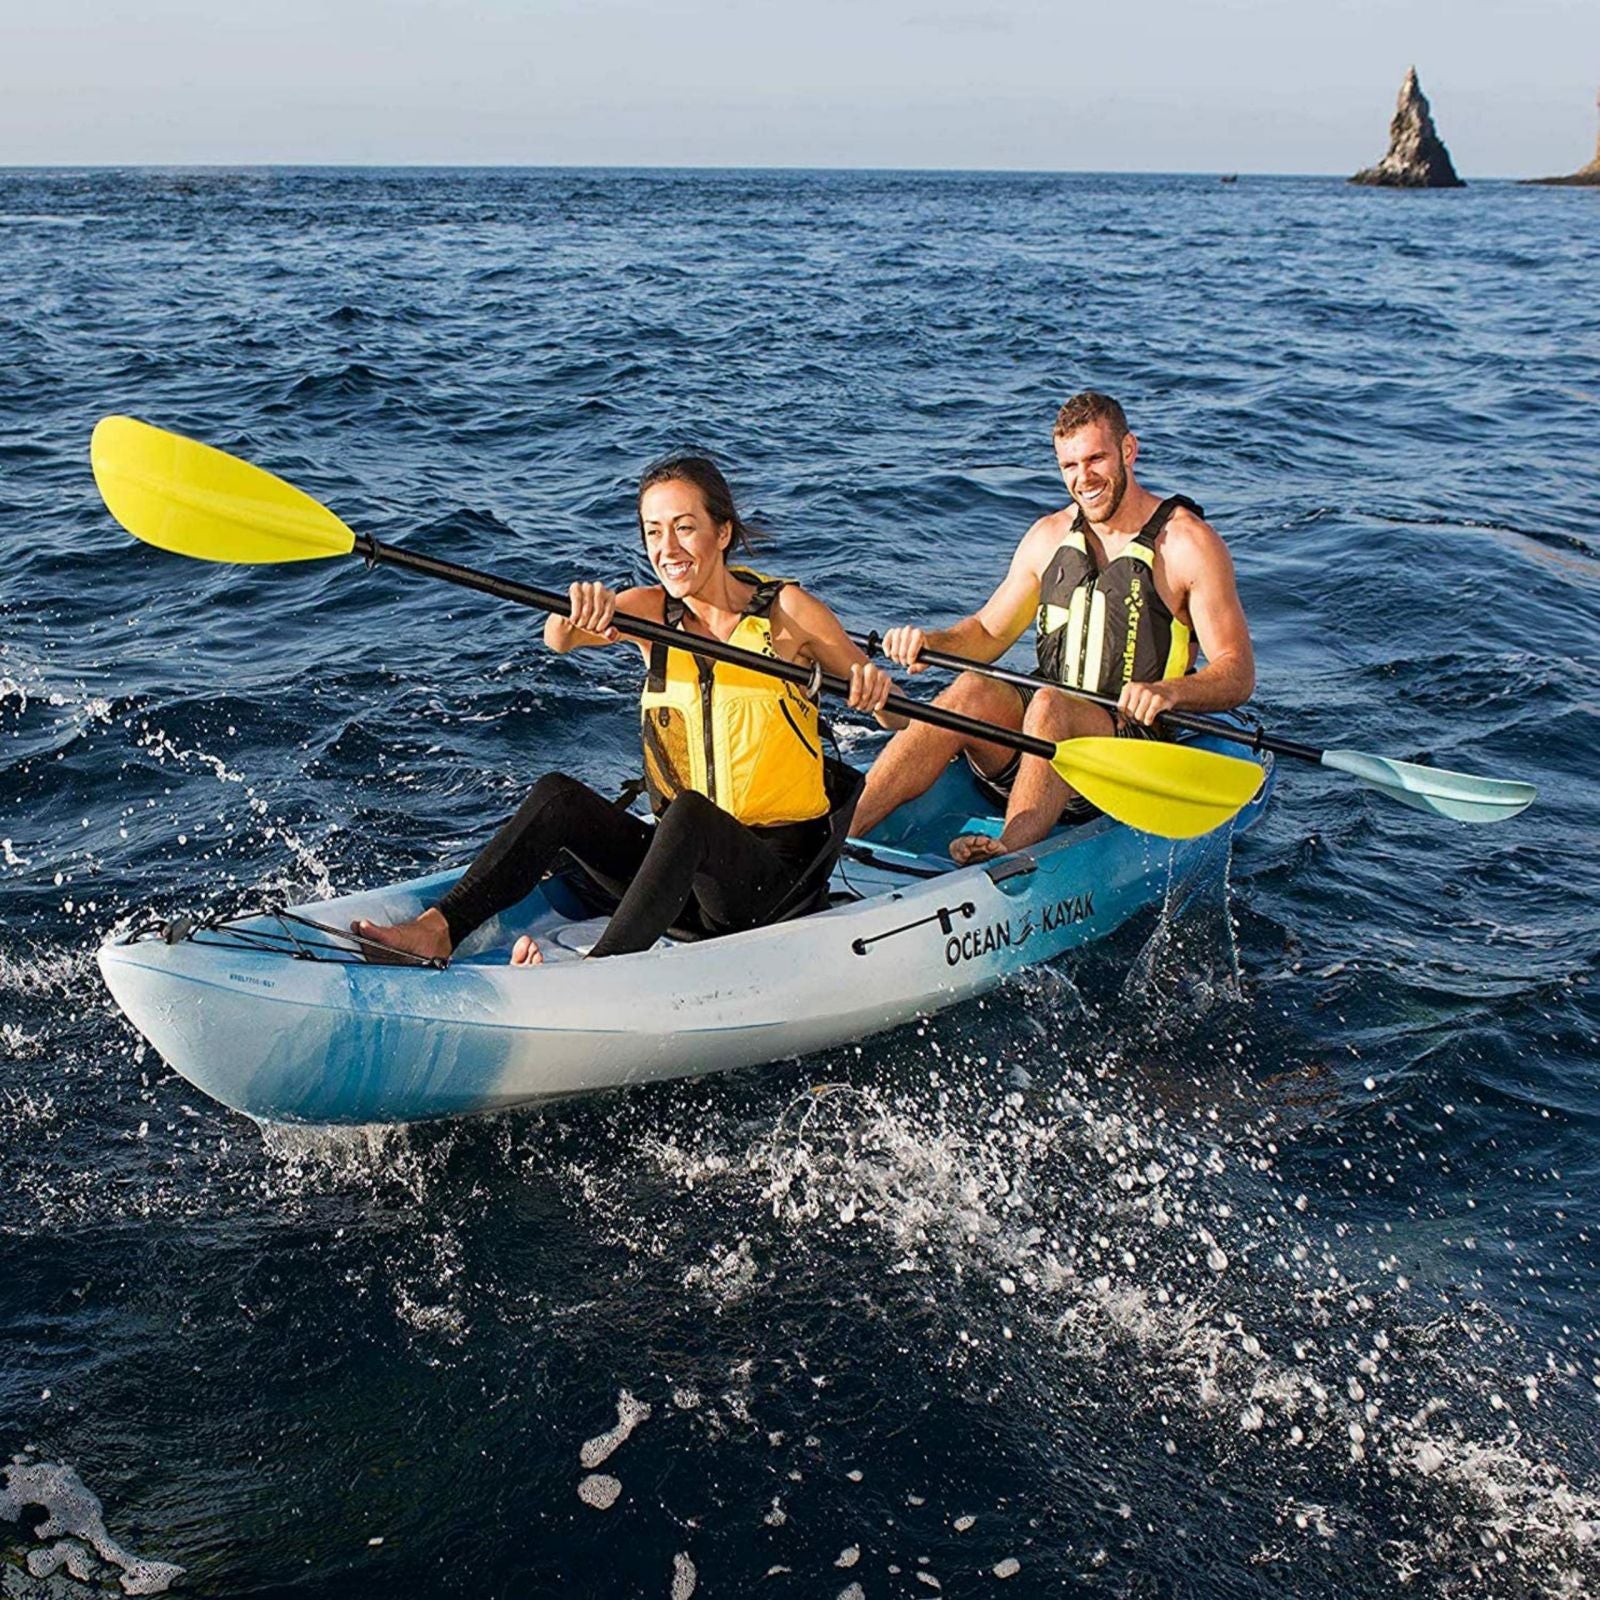 Comfortable Kayak Fishing Boat Canoe Sit-On-Top Seats SUP Paddle Board Seats